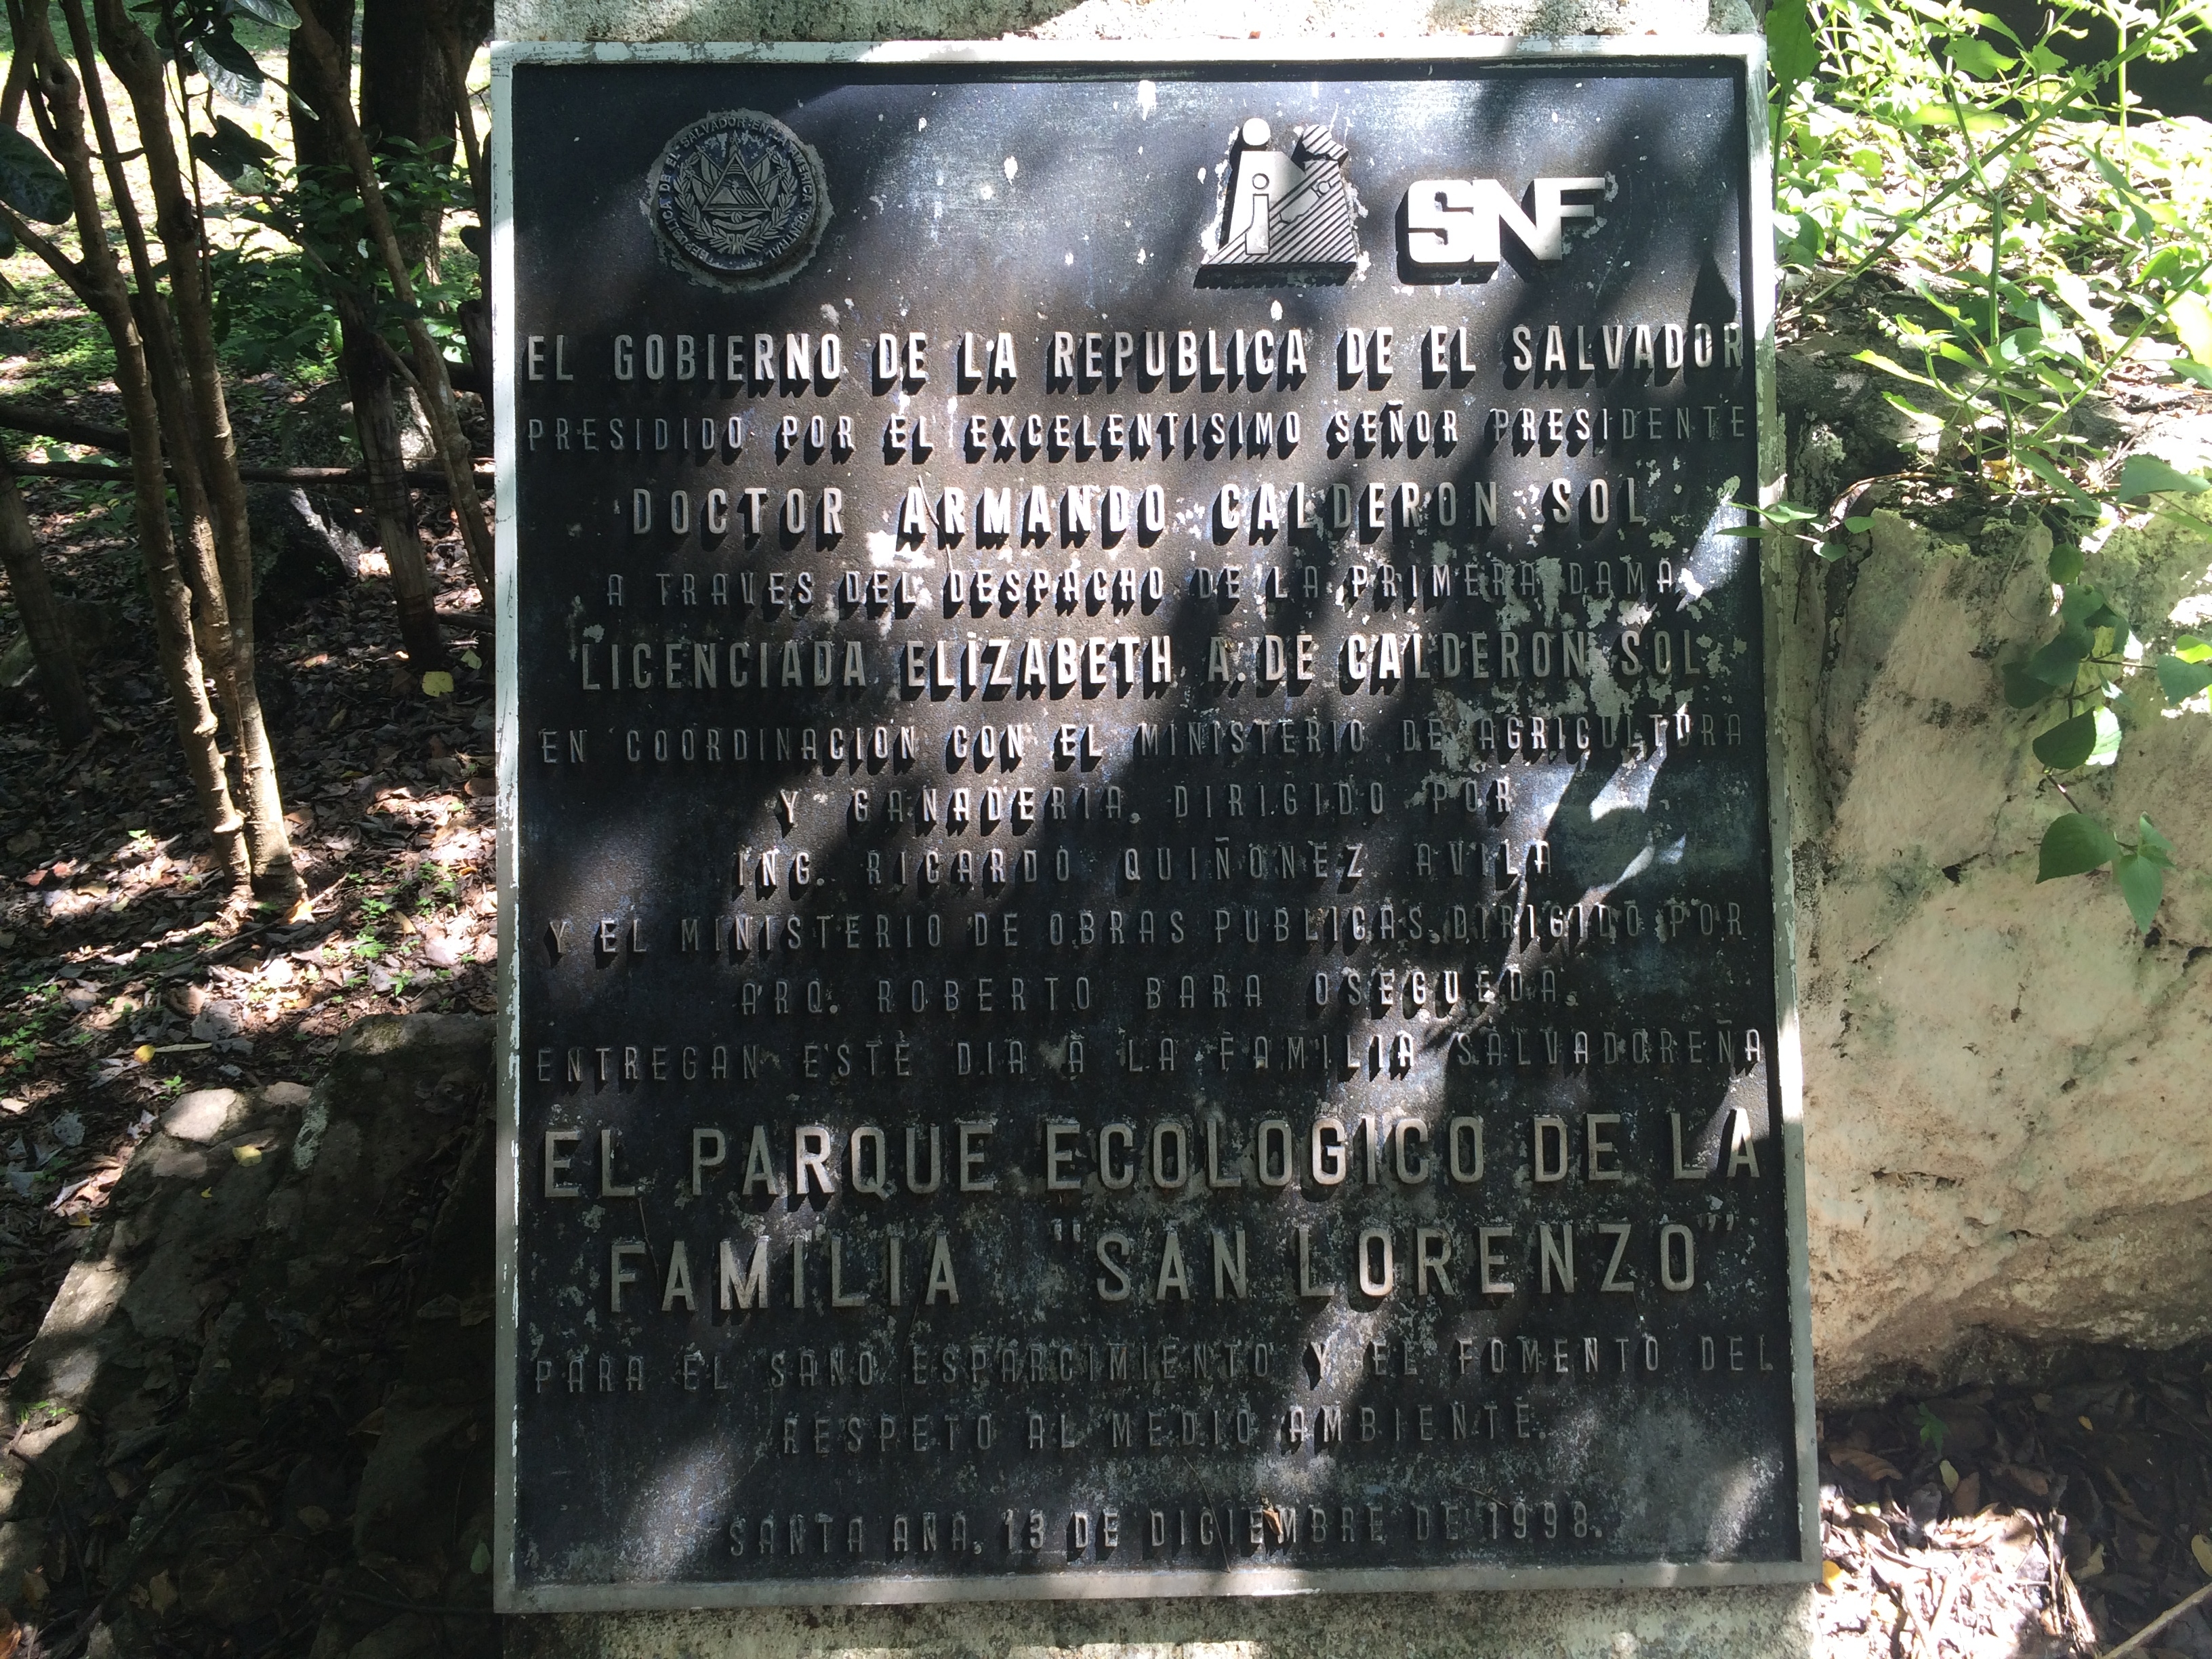 Ecological Park "San Lorenzo" Marker